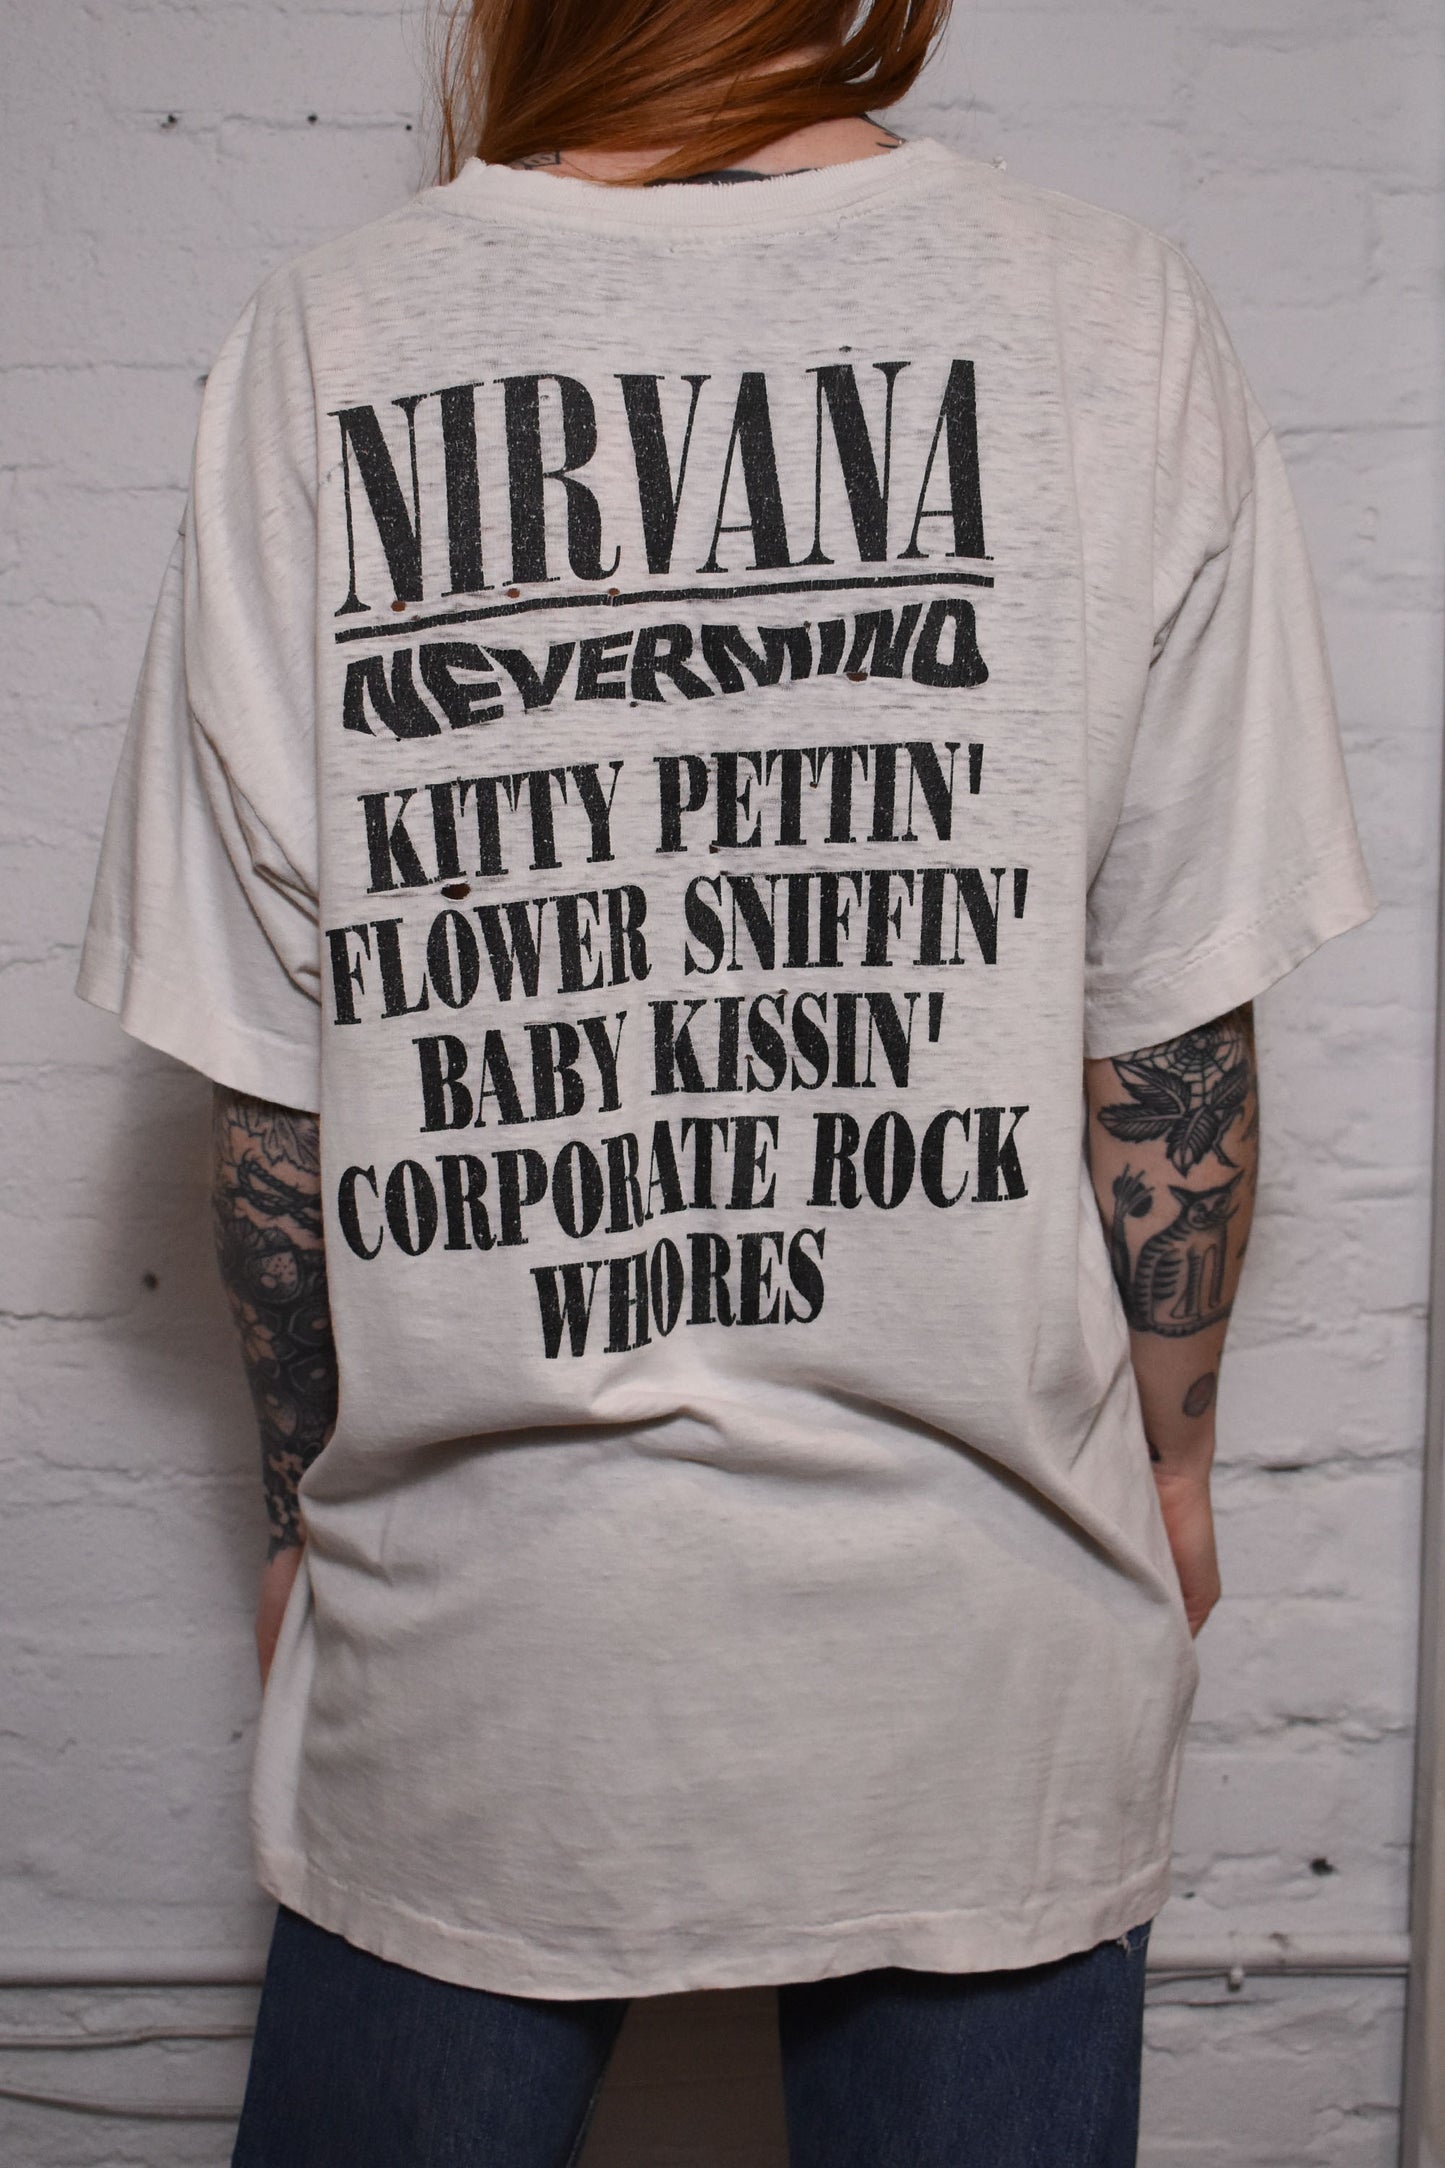 Vintage 1990s "Nirvana Nevermind" T-shirt